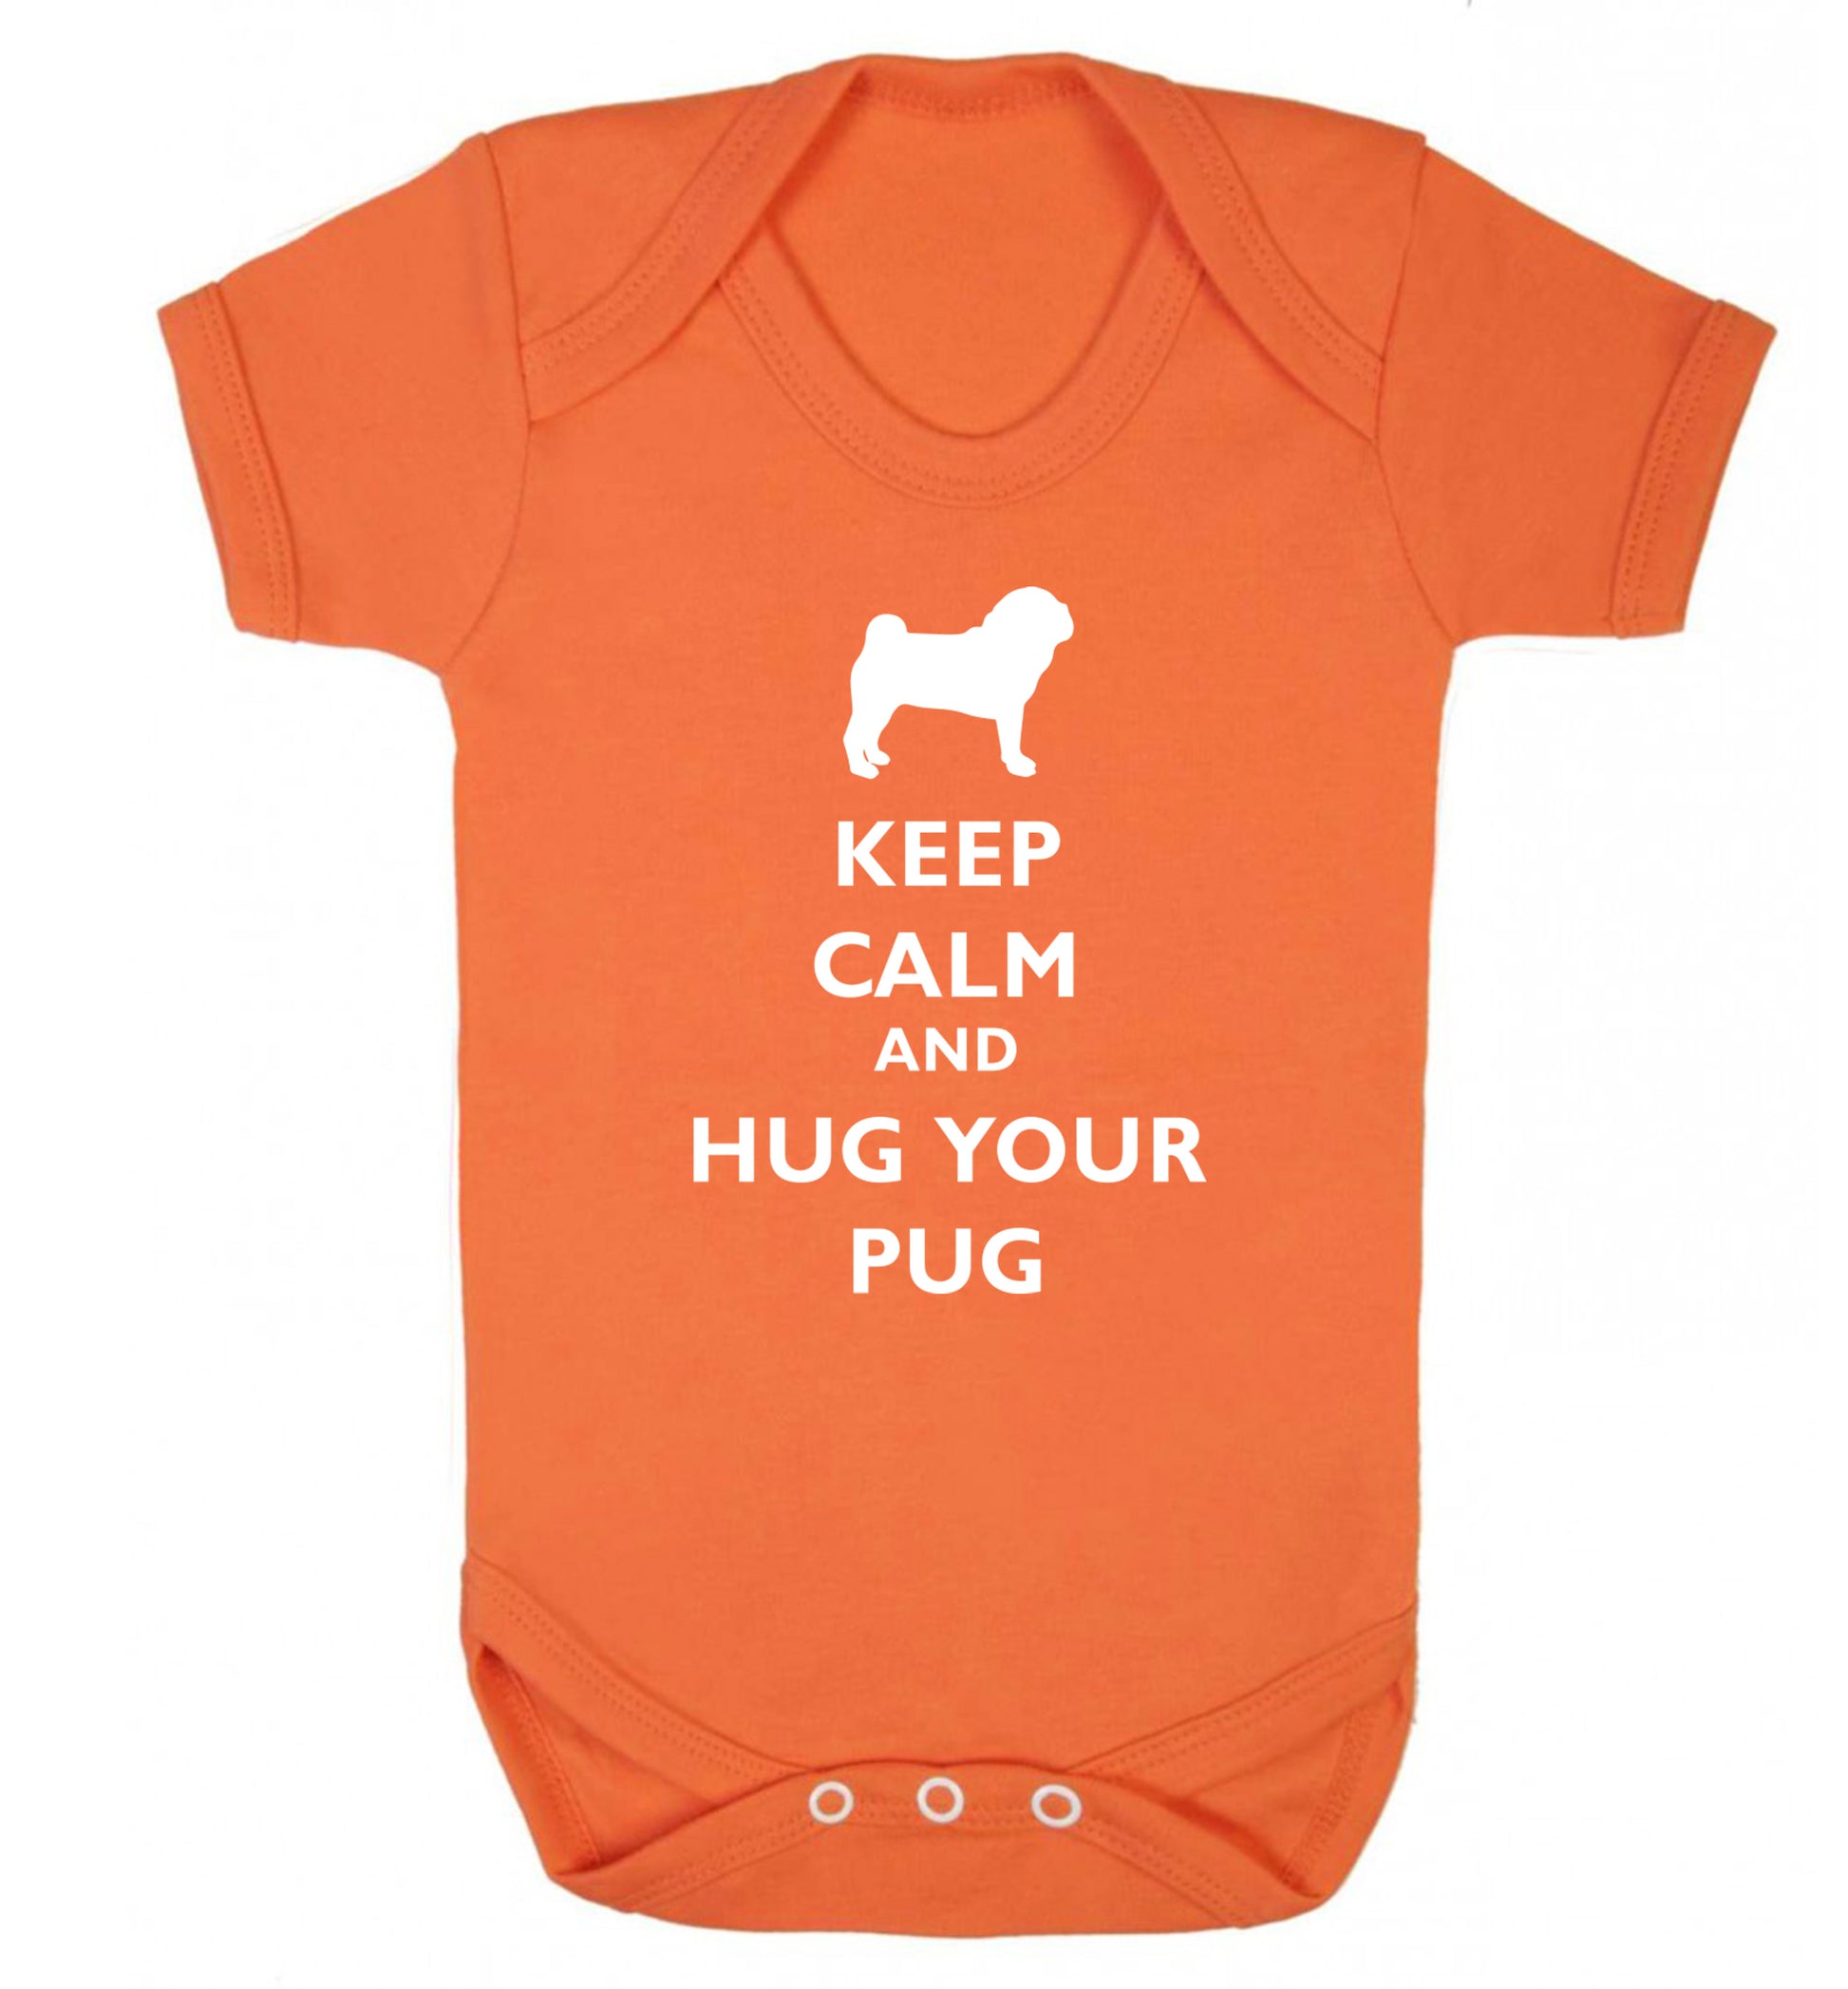 Keep calm and hug your pug Baby Vest orange 18-24 months